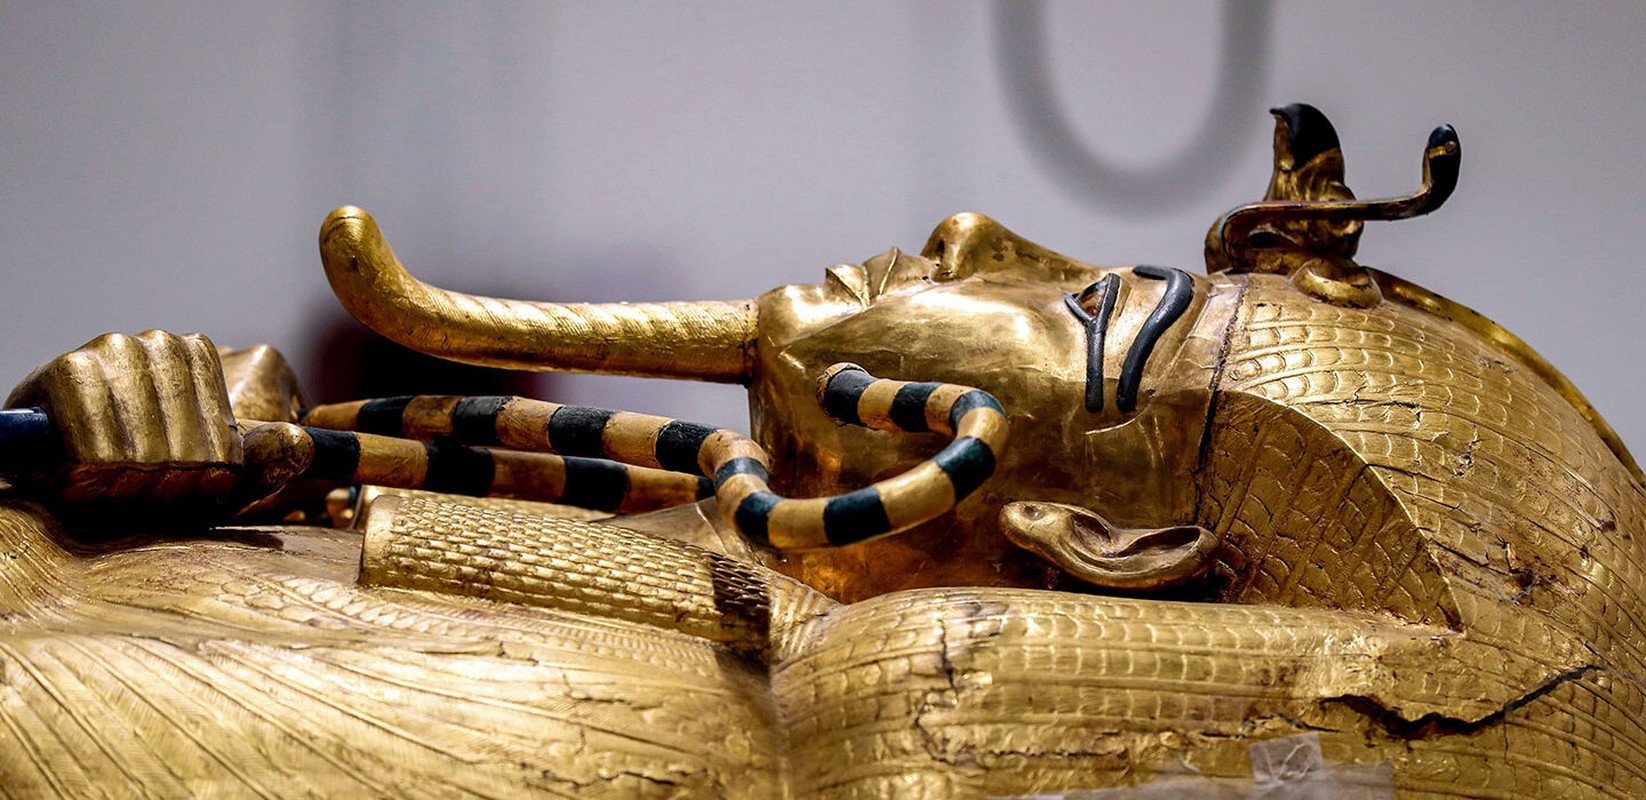 Mo mo Pharaoh Tutankhamun, chuyen gia giat minh thay dieu khong tuong-Hinh-8